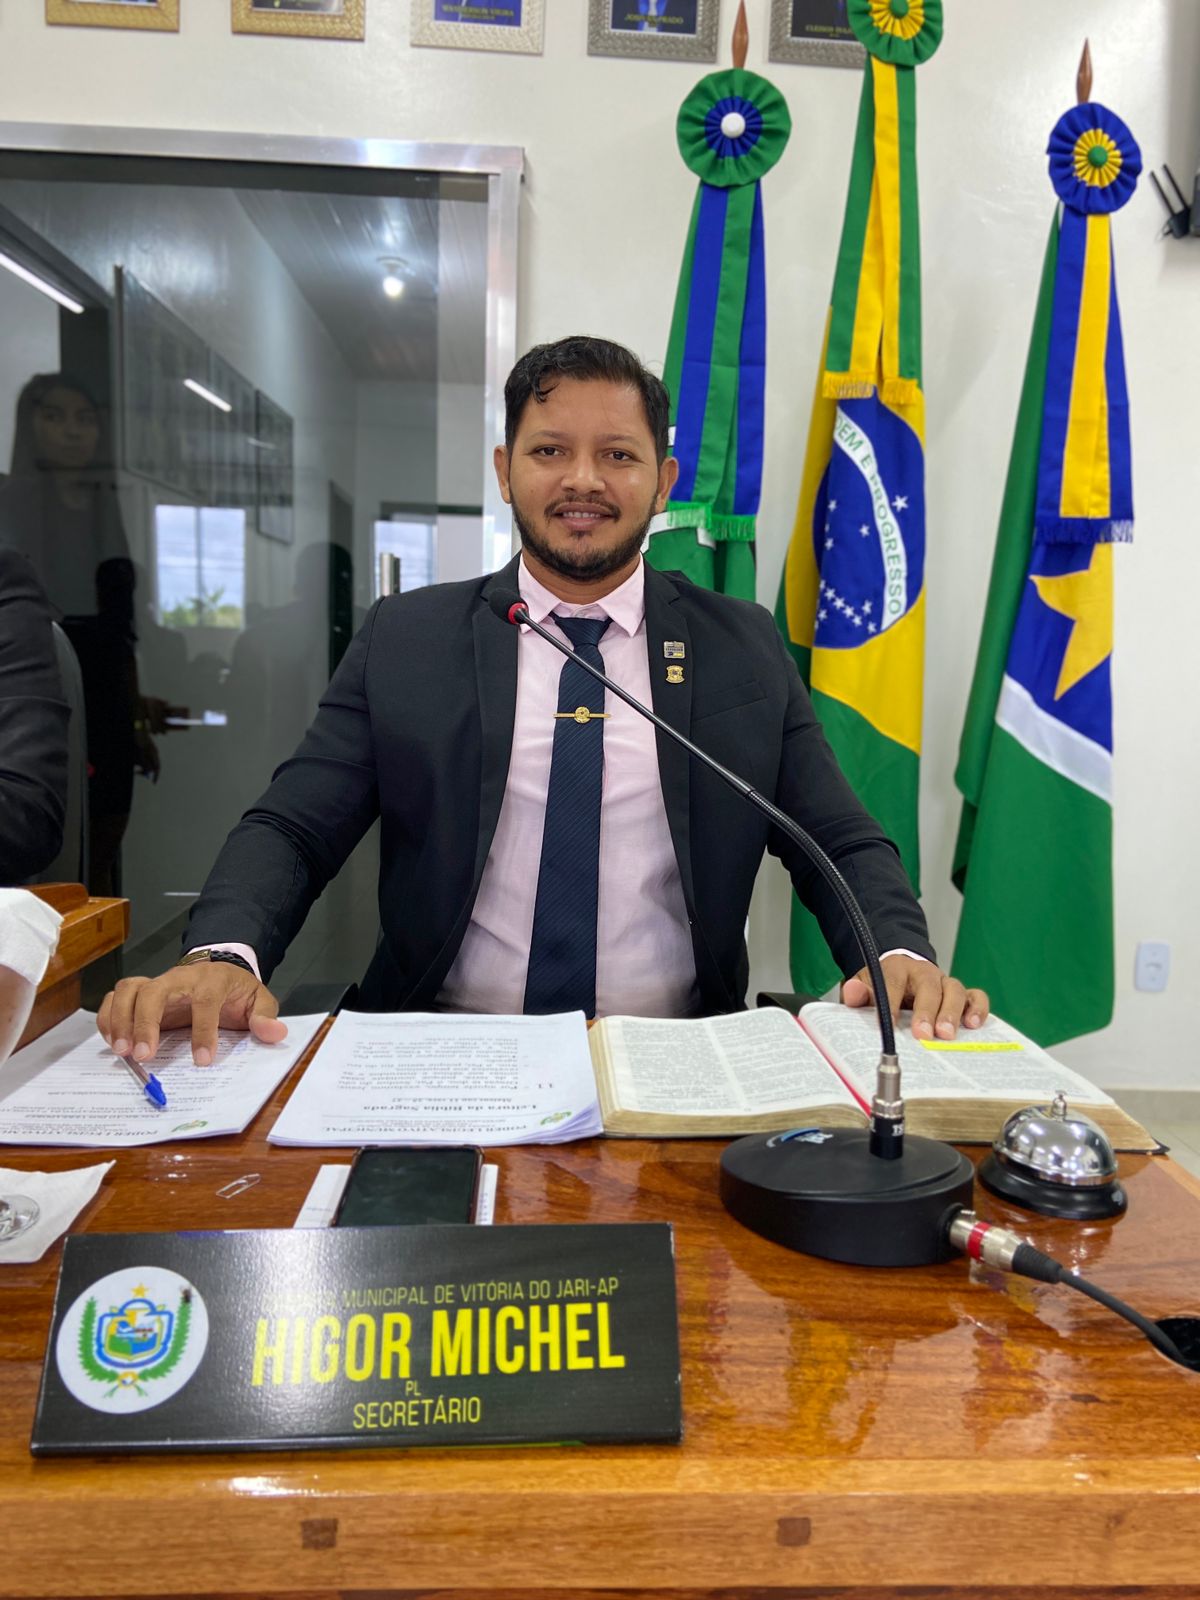 Higor Michel Neves Da Silva